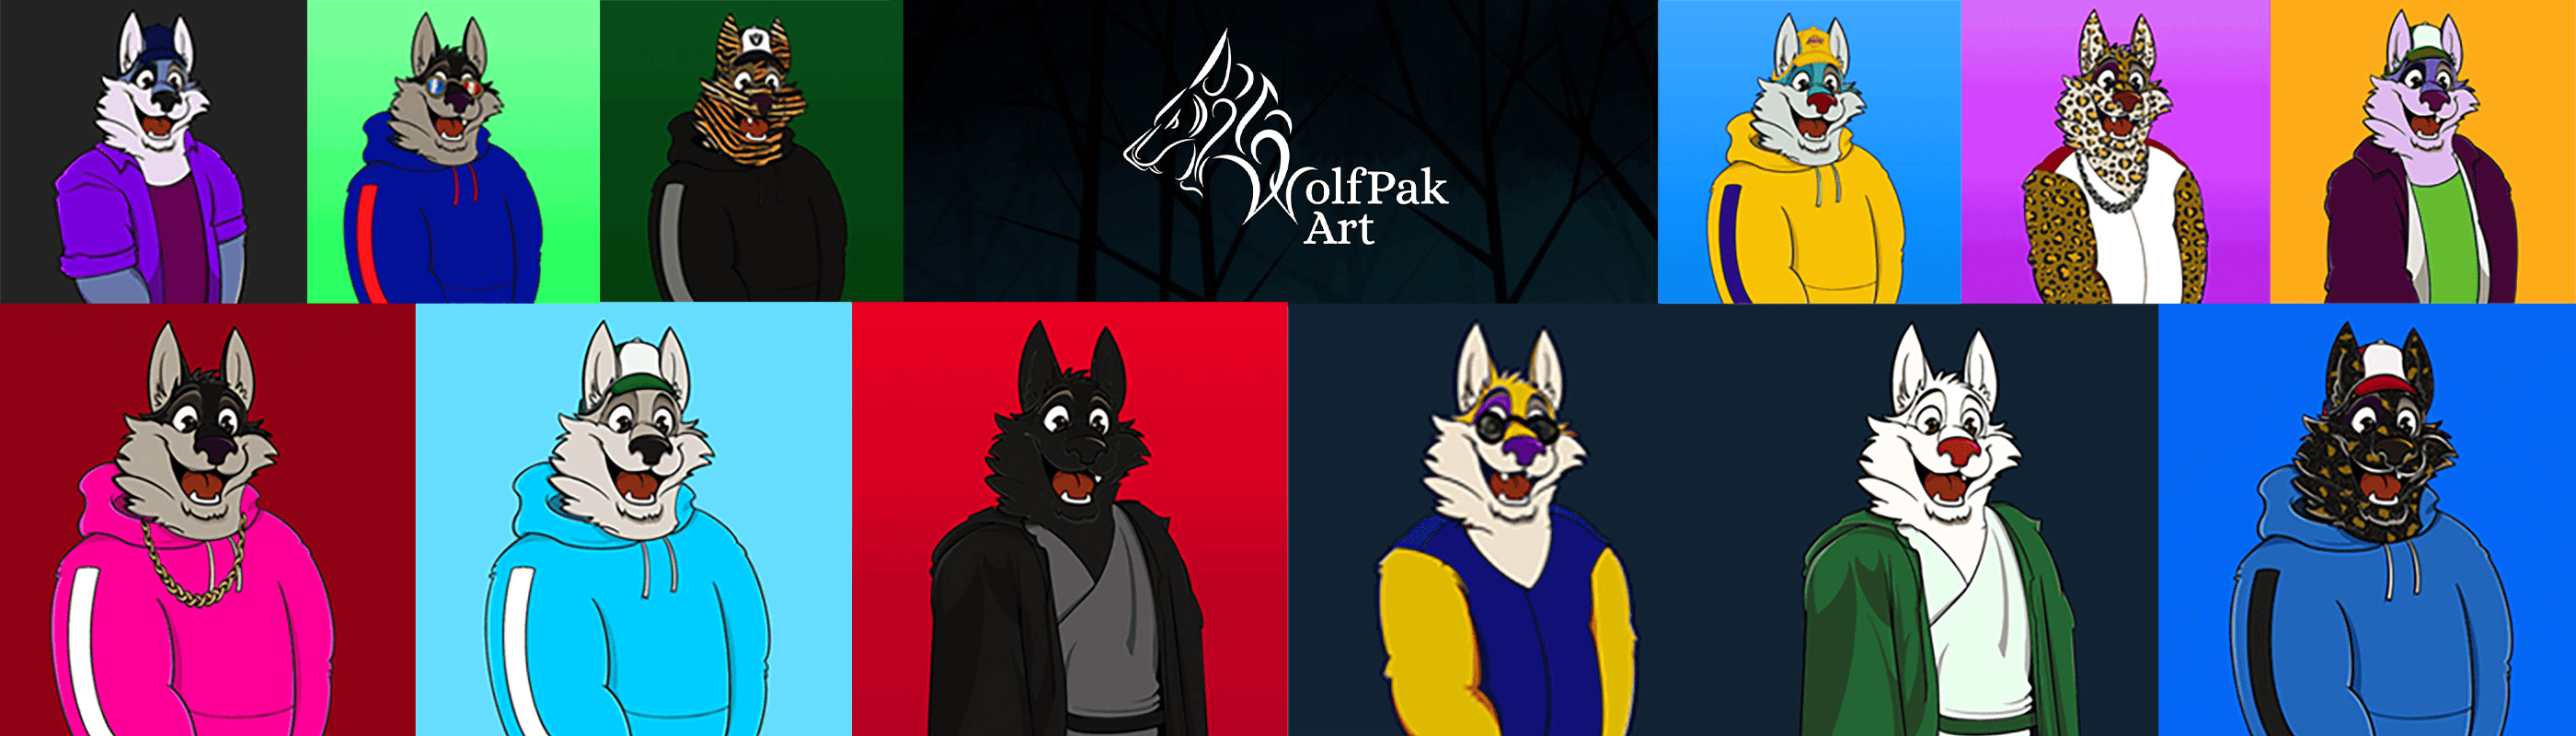 WolfPak Art | NFTs for Charity